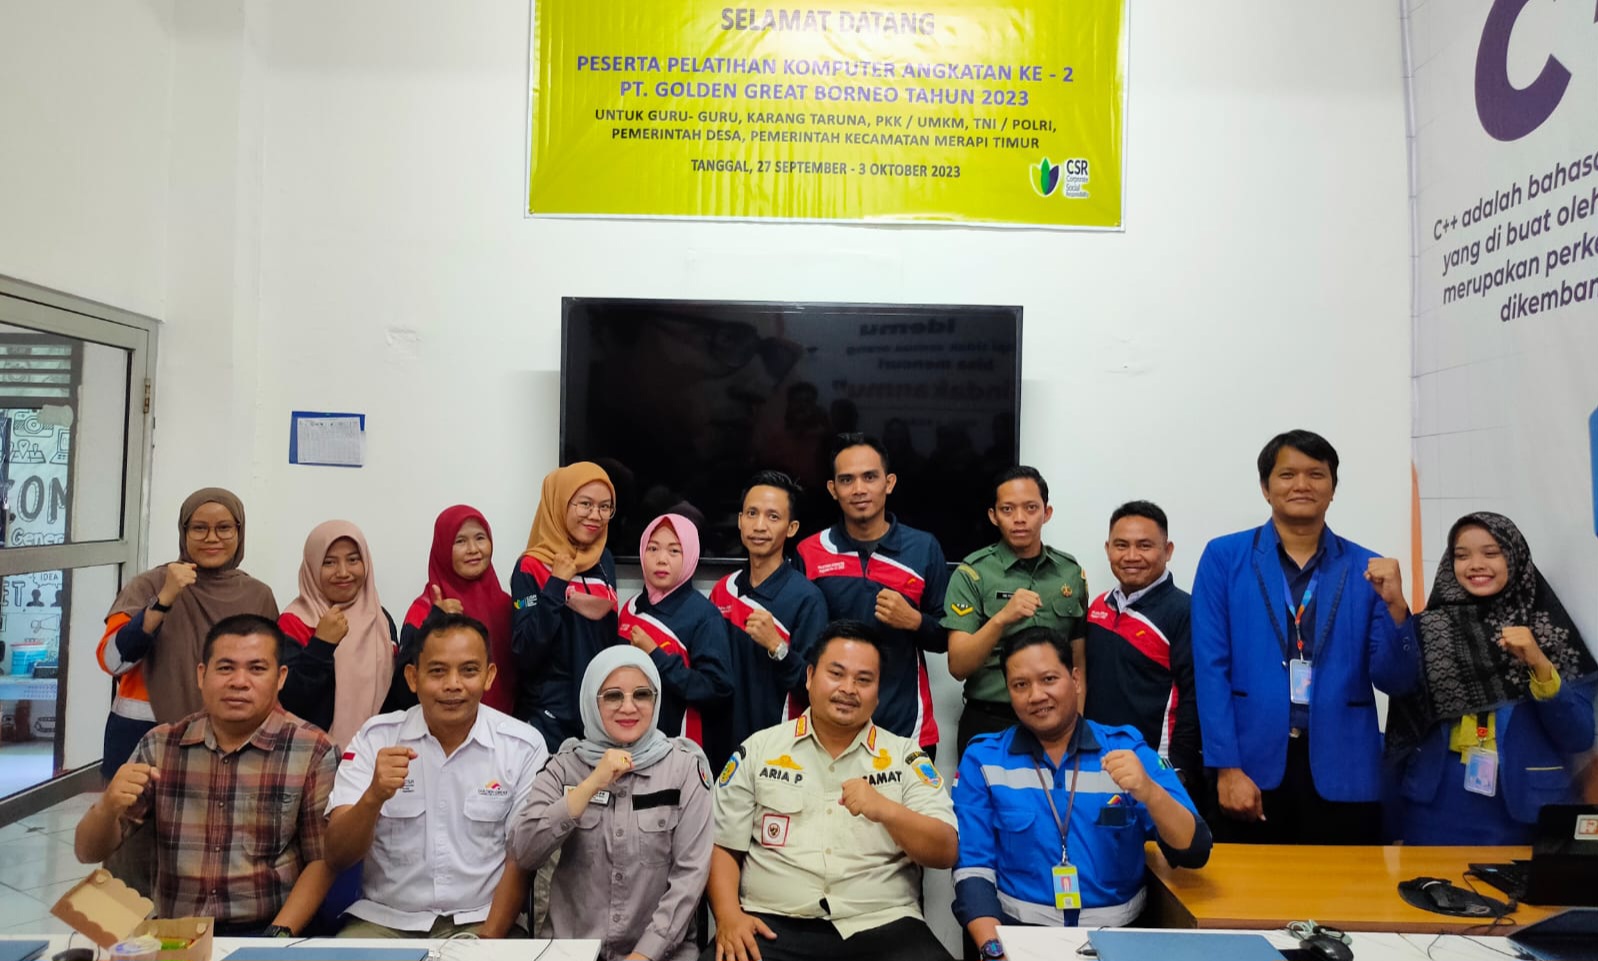 PT Golden Great Borneo Gelar Pelatihan Komputer Diikuti Perwakilan 6 Desa dan Instansi 